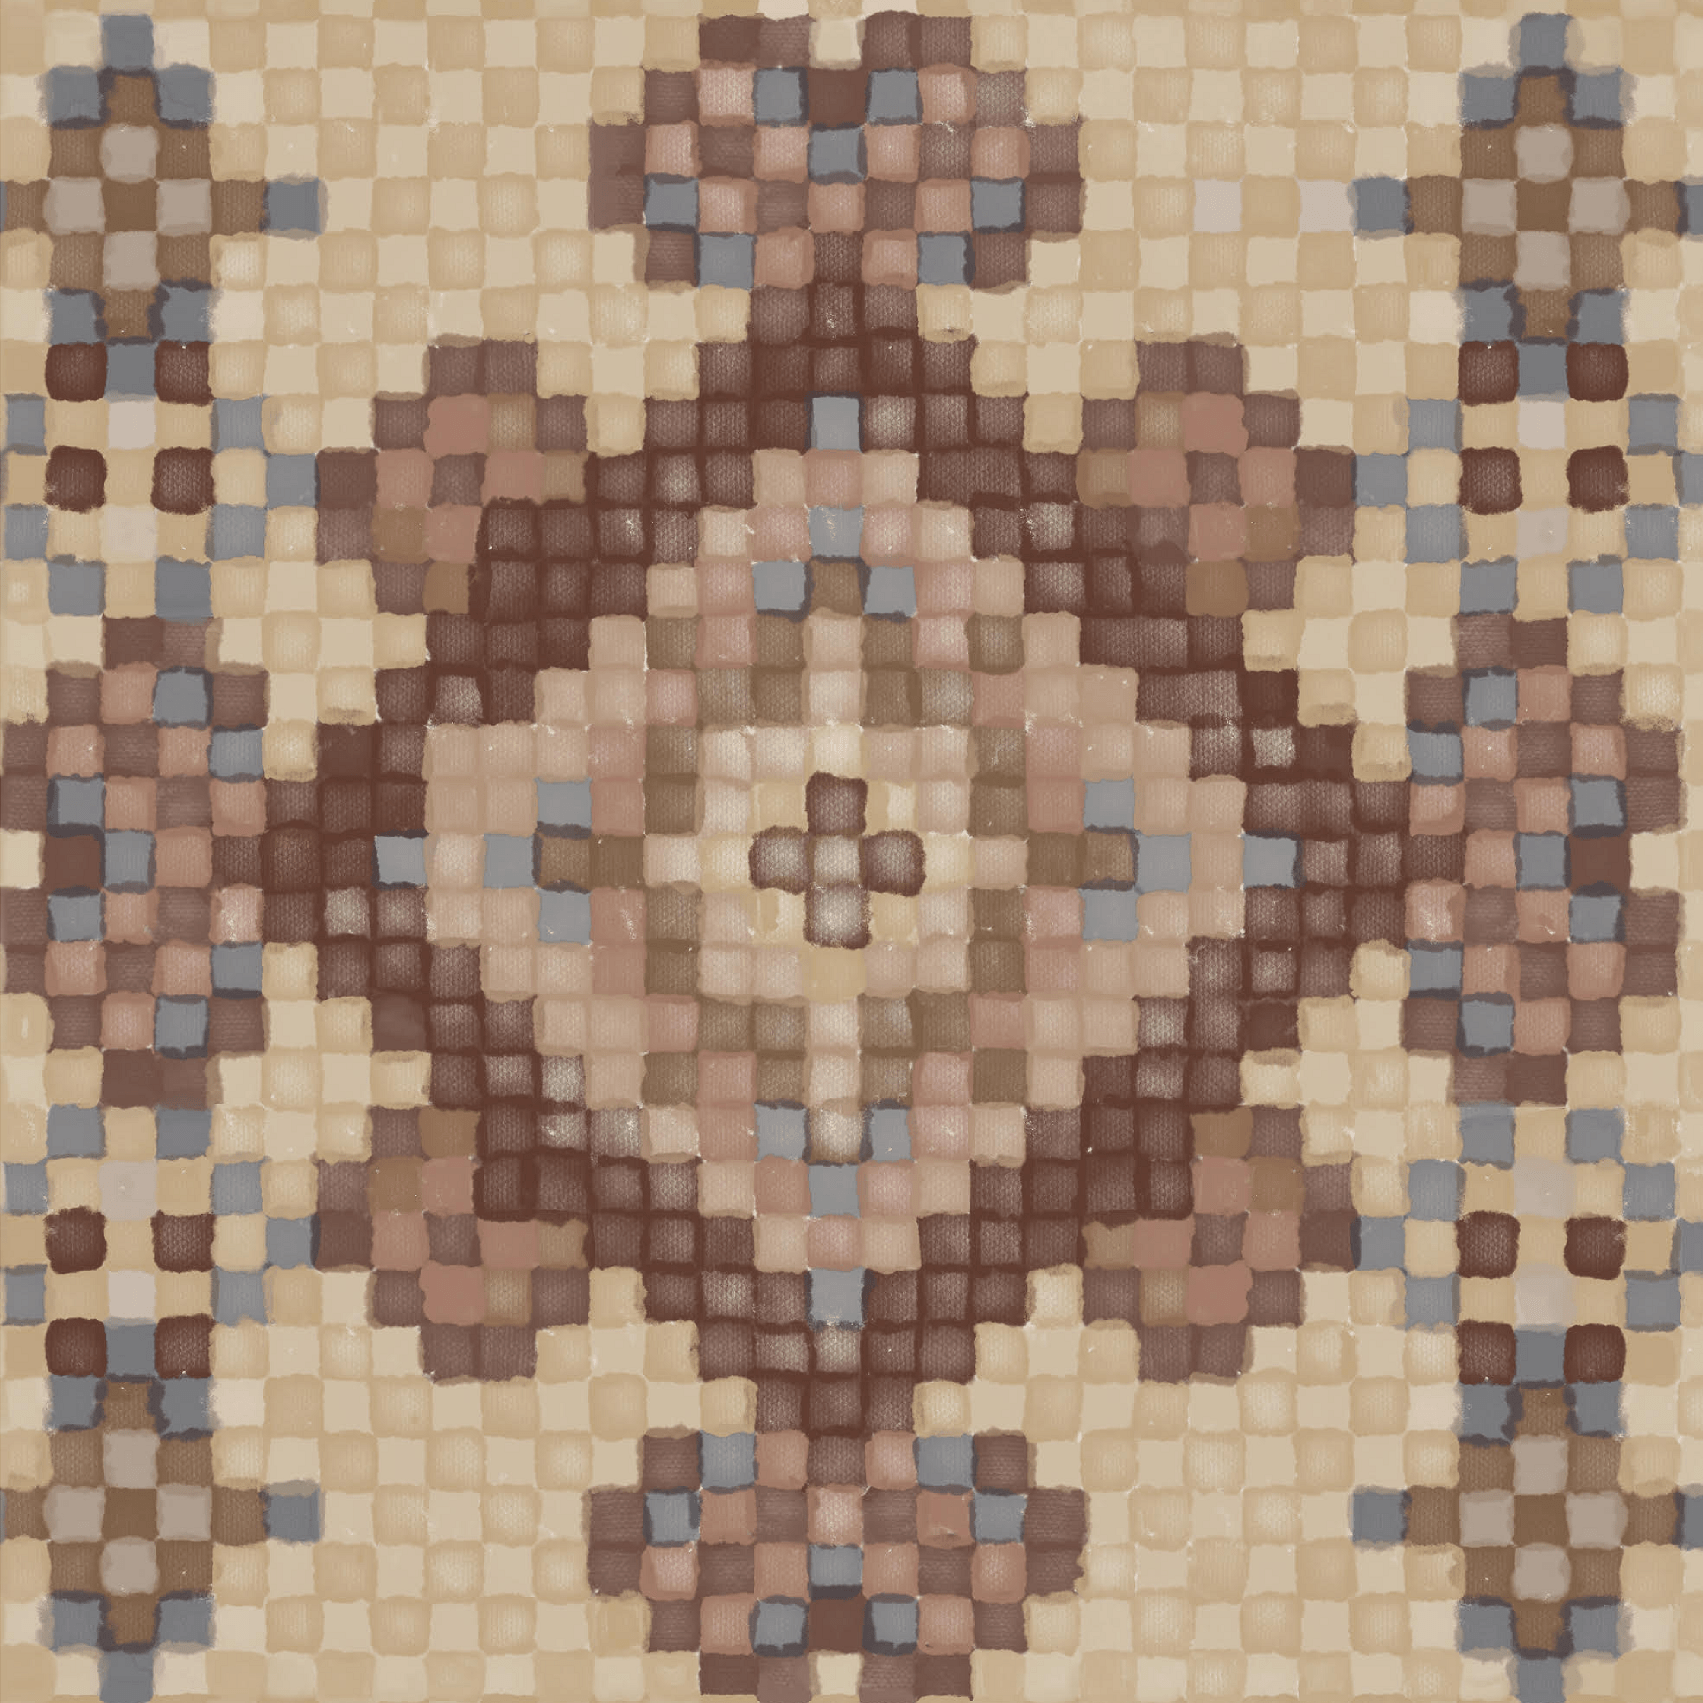 Southwestern style mosaic tile wallpaper sample